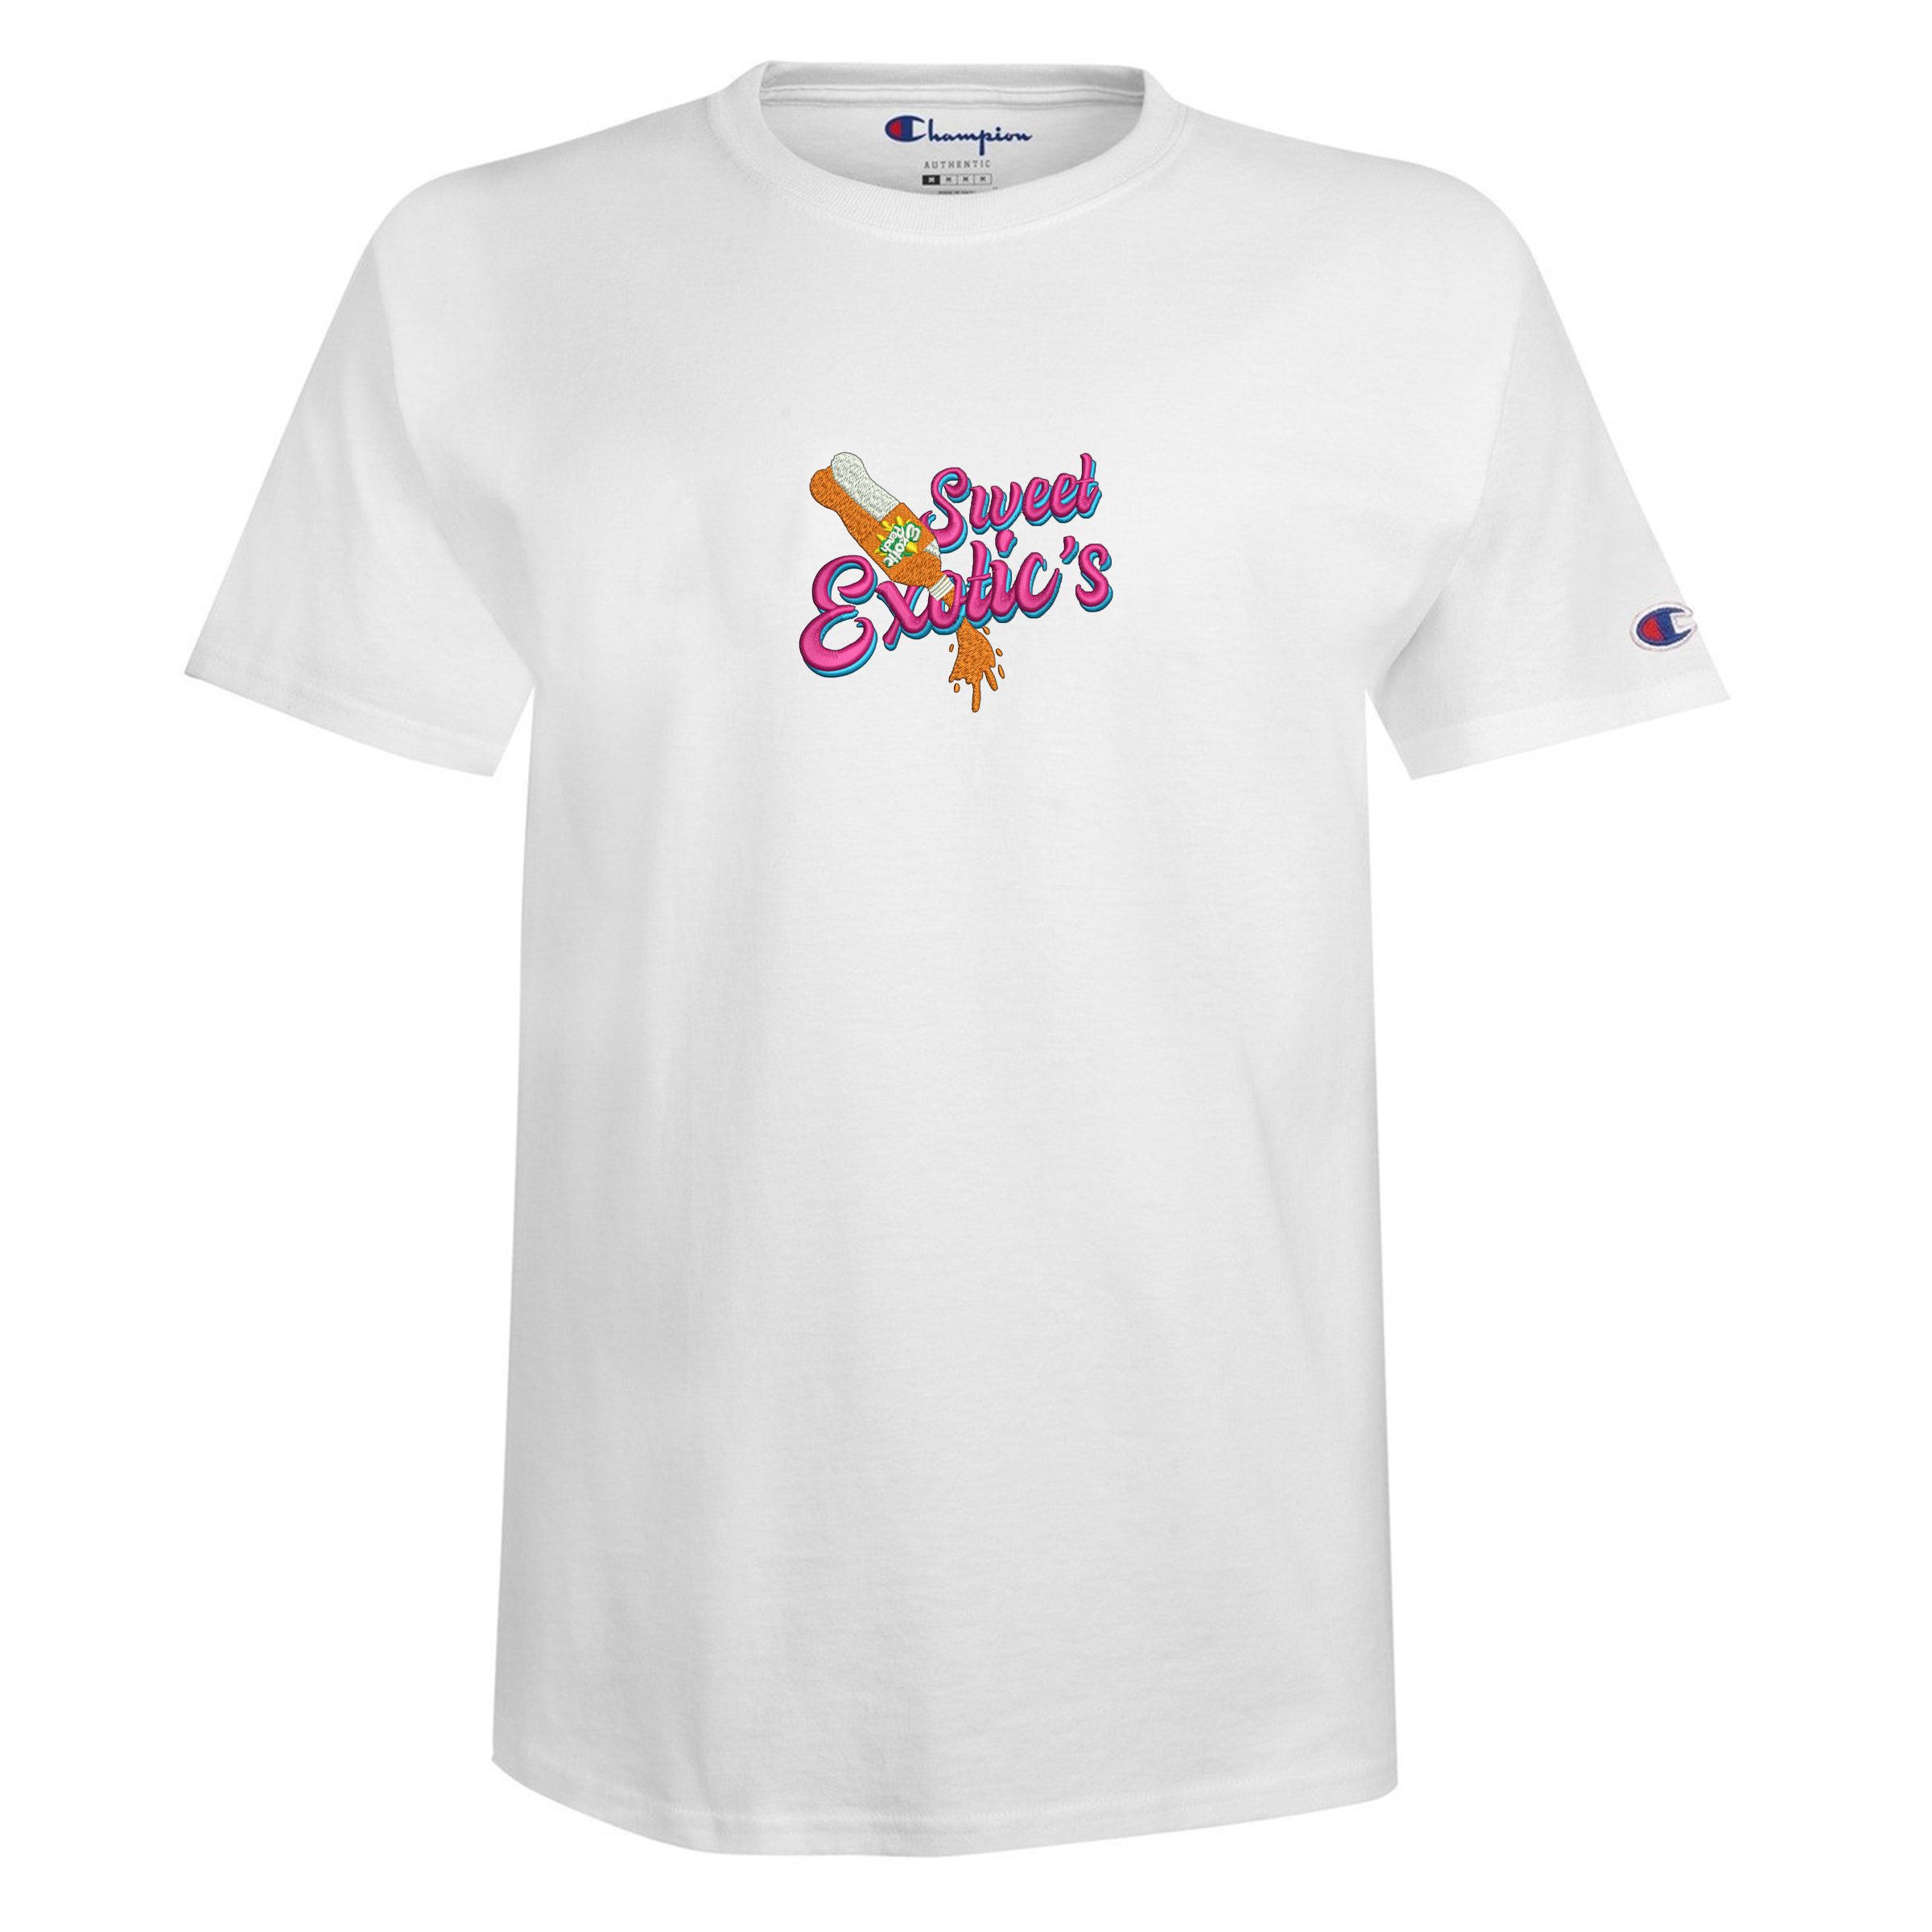 Sweet Exotics "Original" T-Shirt